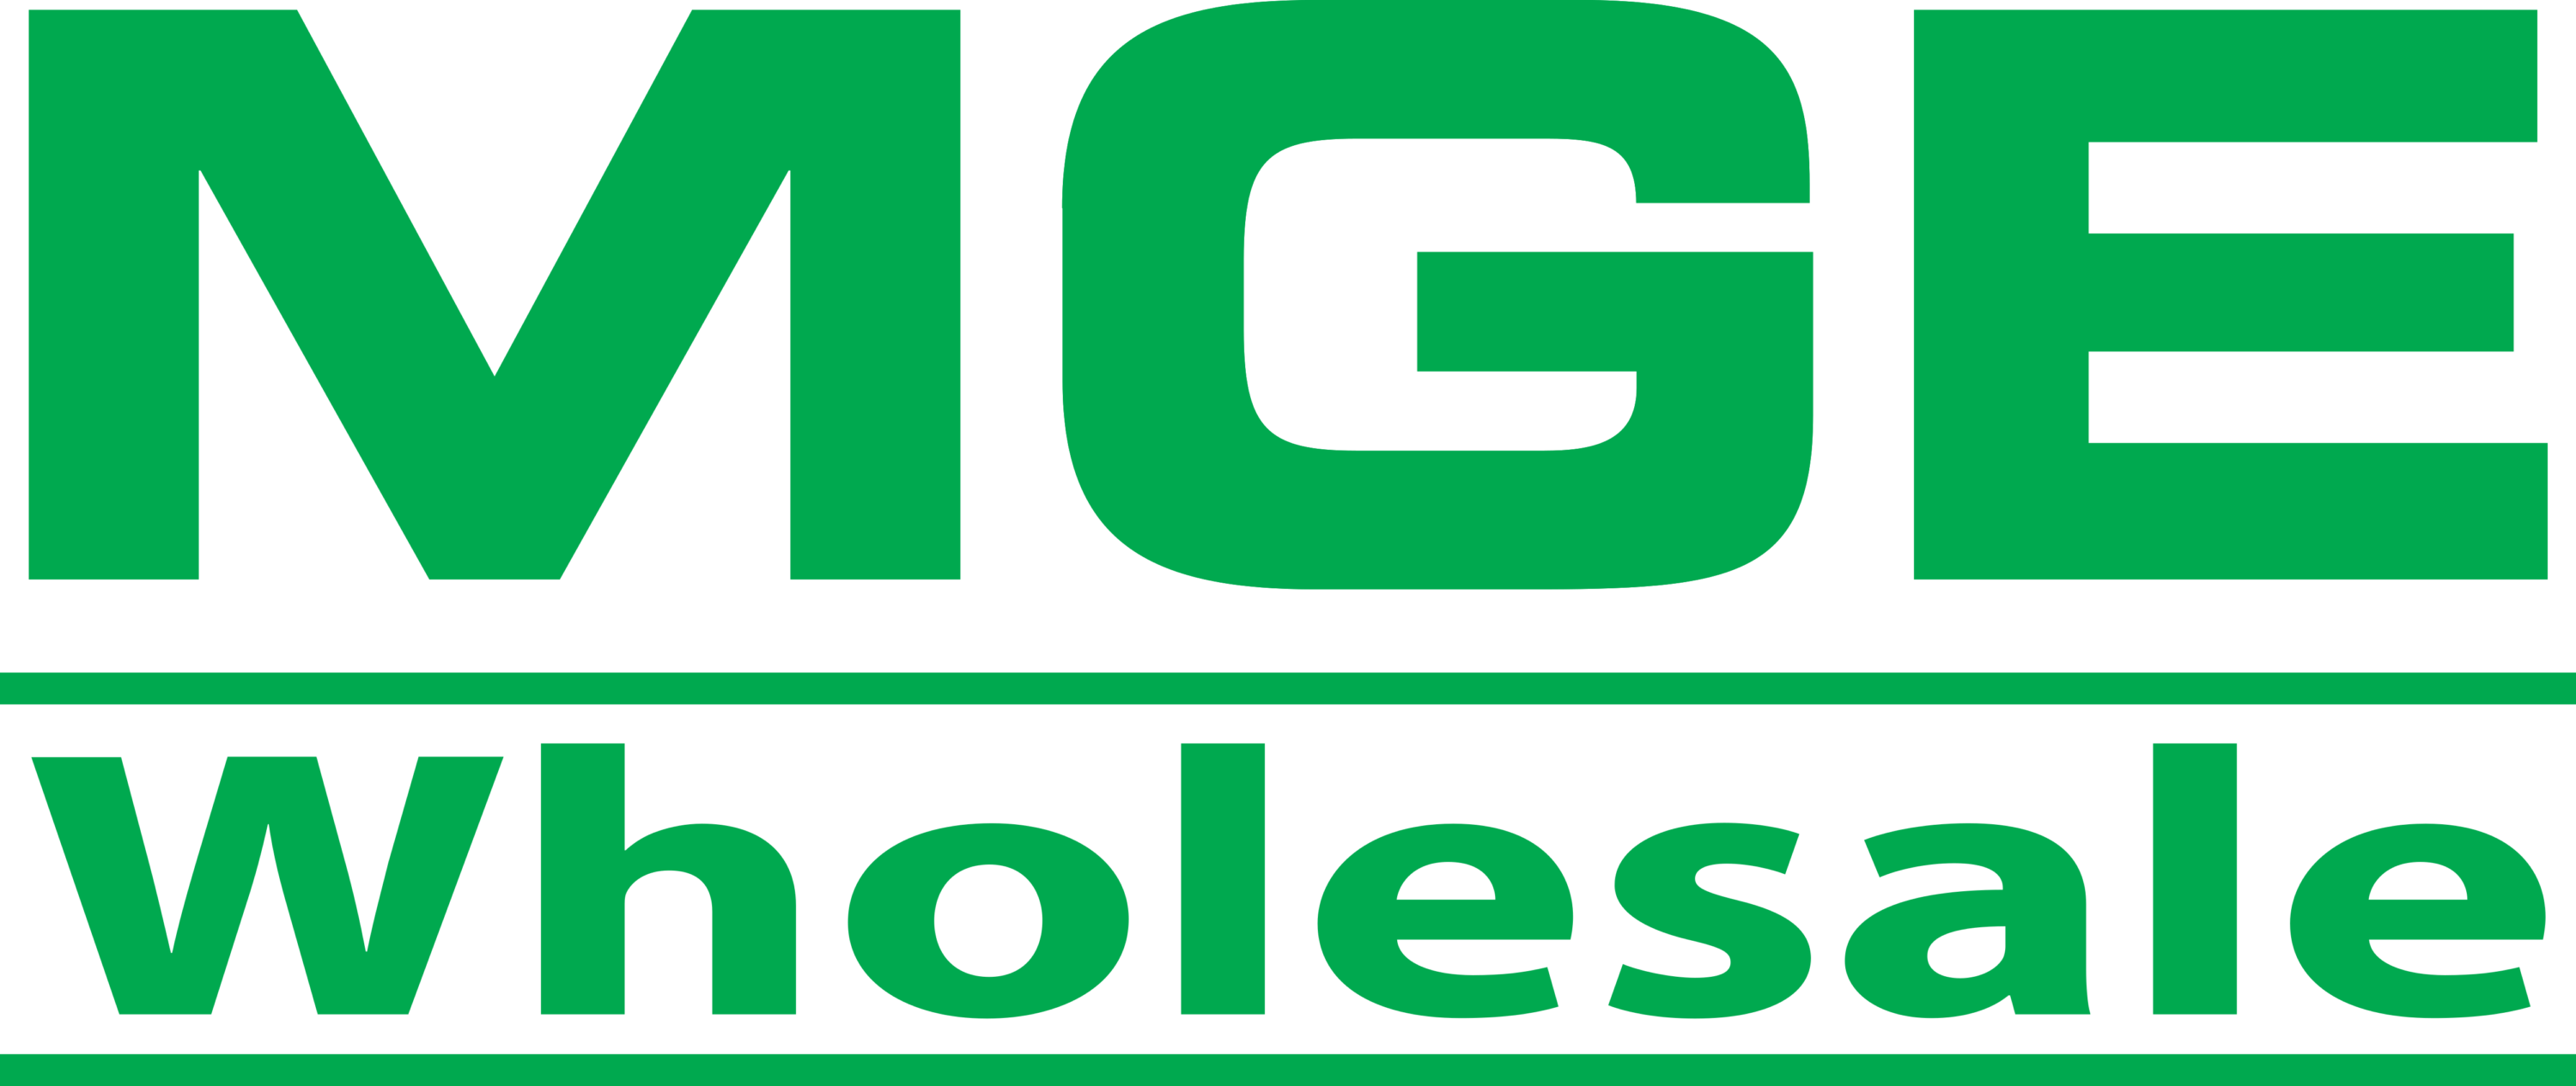 MGE Wholesale Logo